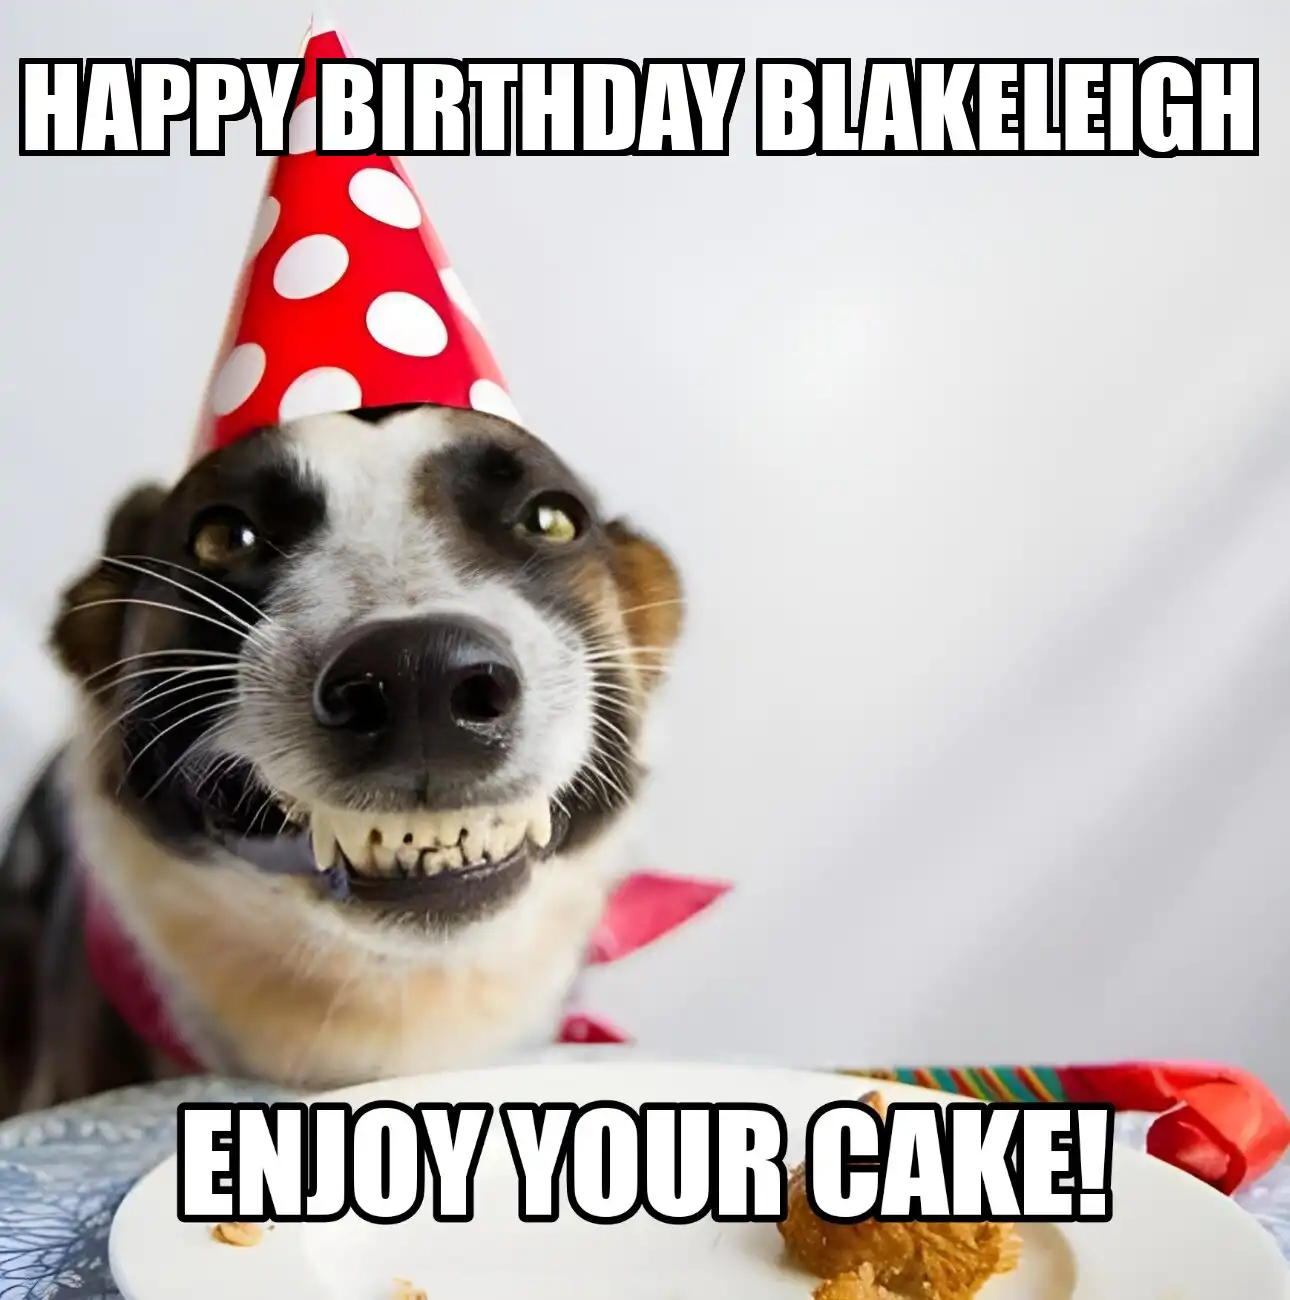 Happy Birthday Blakeleigh Enjoy Your Cake Dog Meme